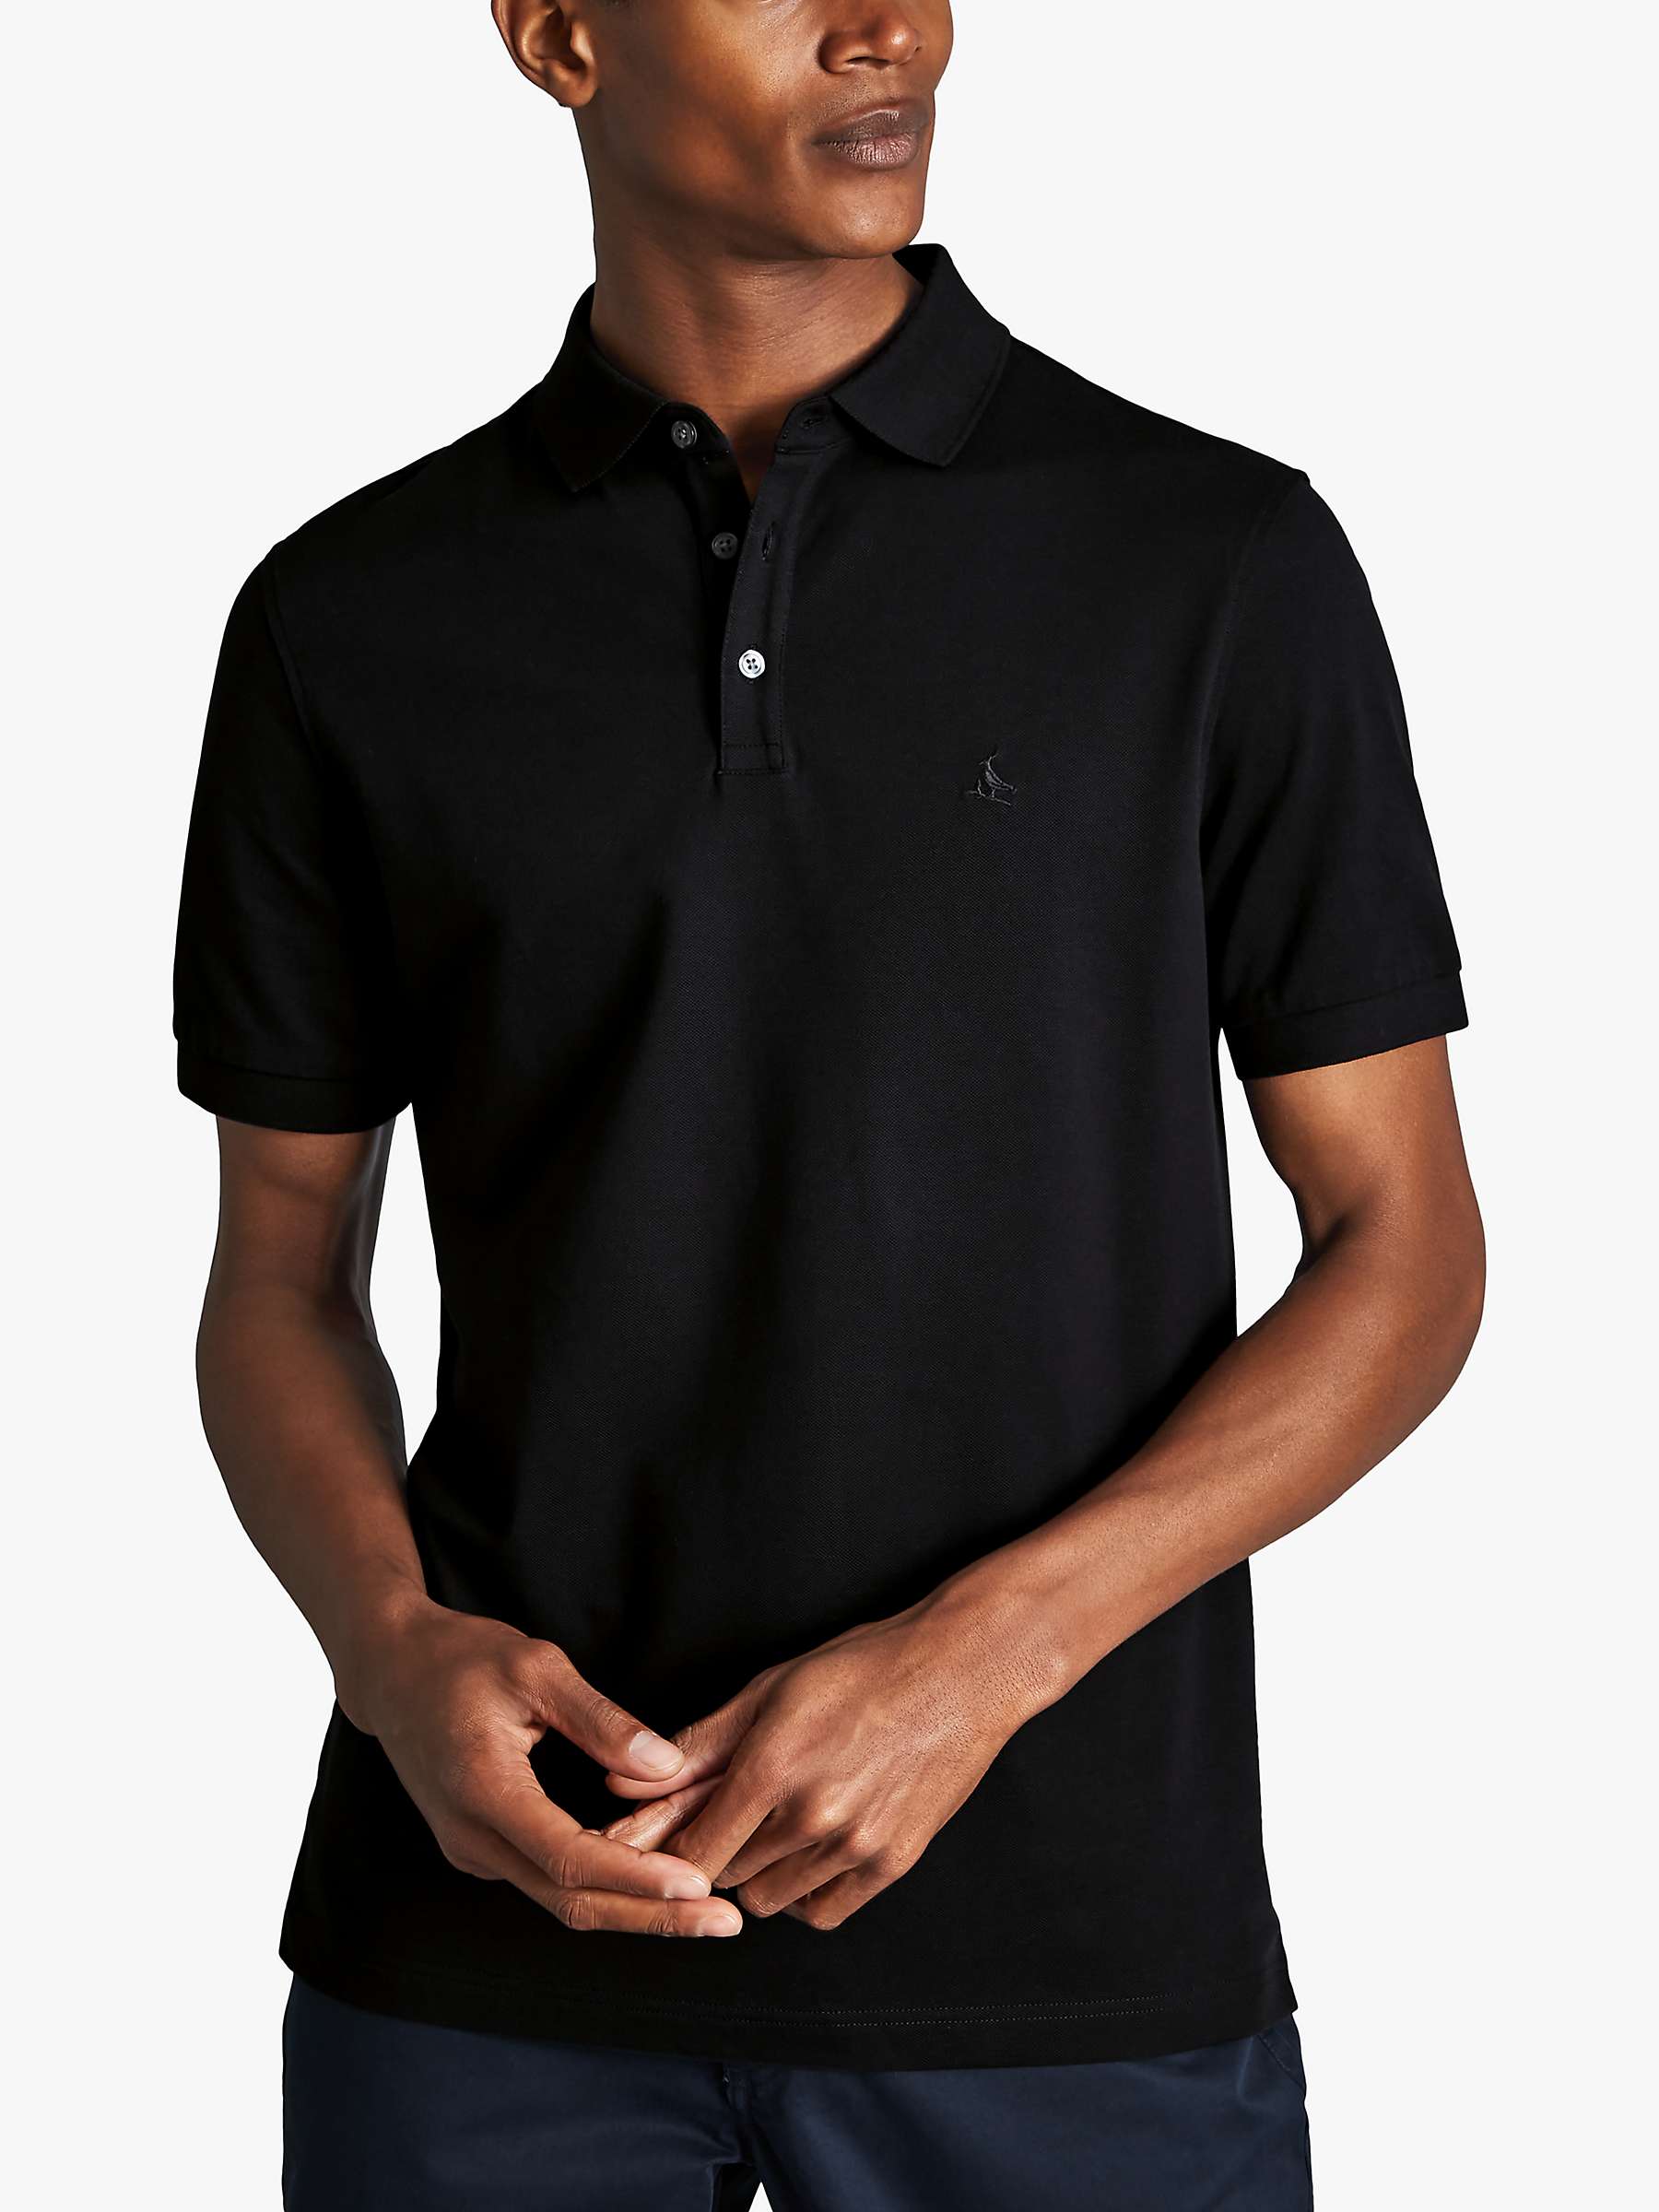 Charles Tyrwhitt Pique Polo Shirt, Black at John Lewis & Partners